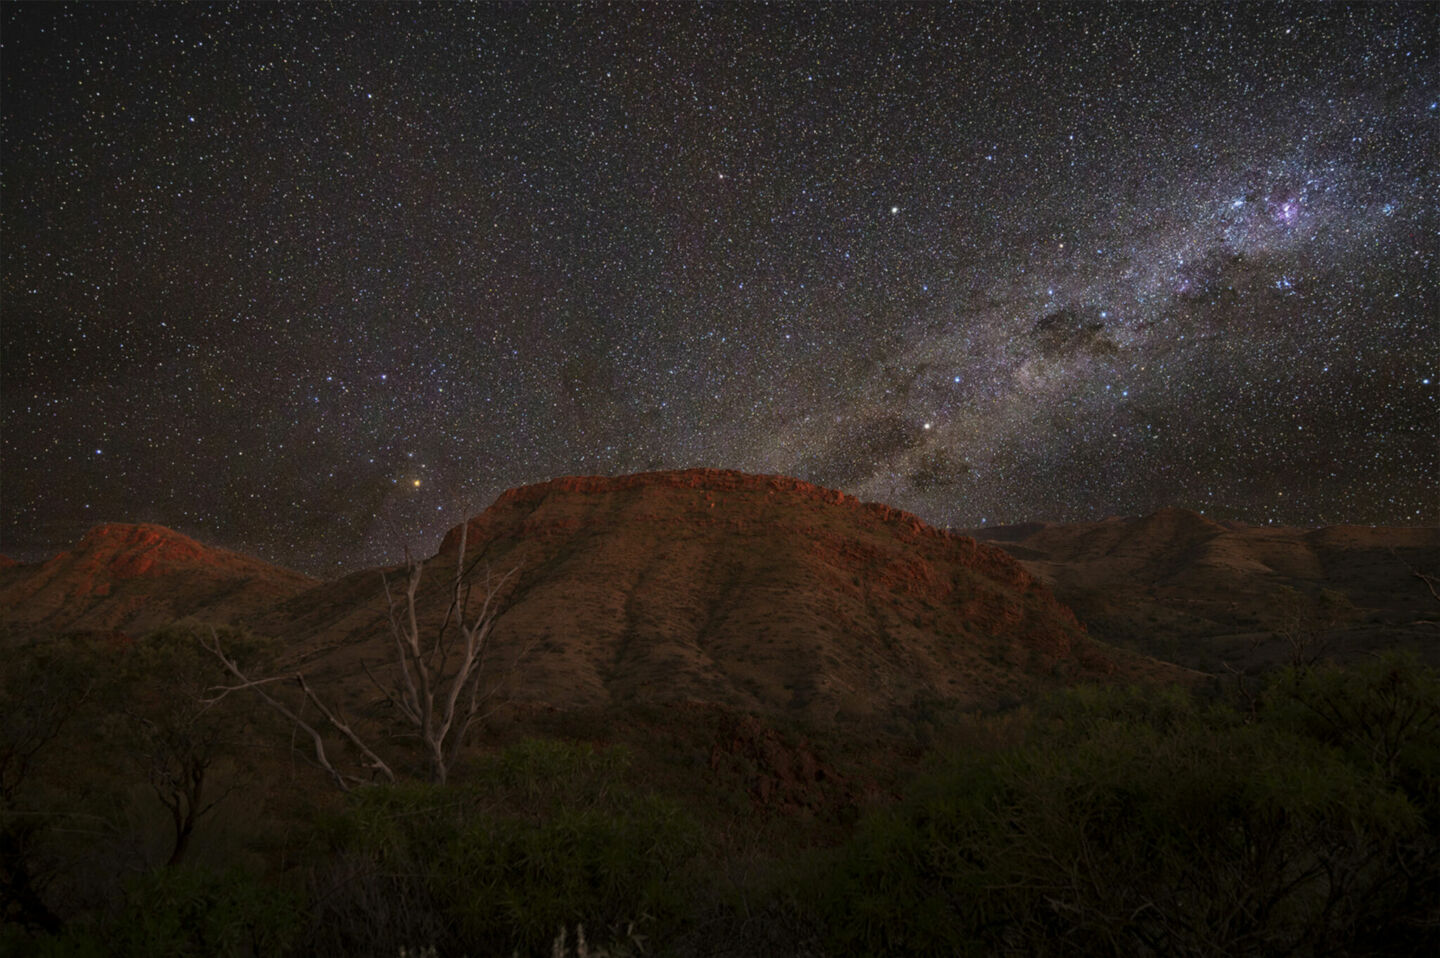 ARKAROOLA WILDERNESS SANCTUARY, Flinders Ranges, South Australia